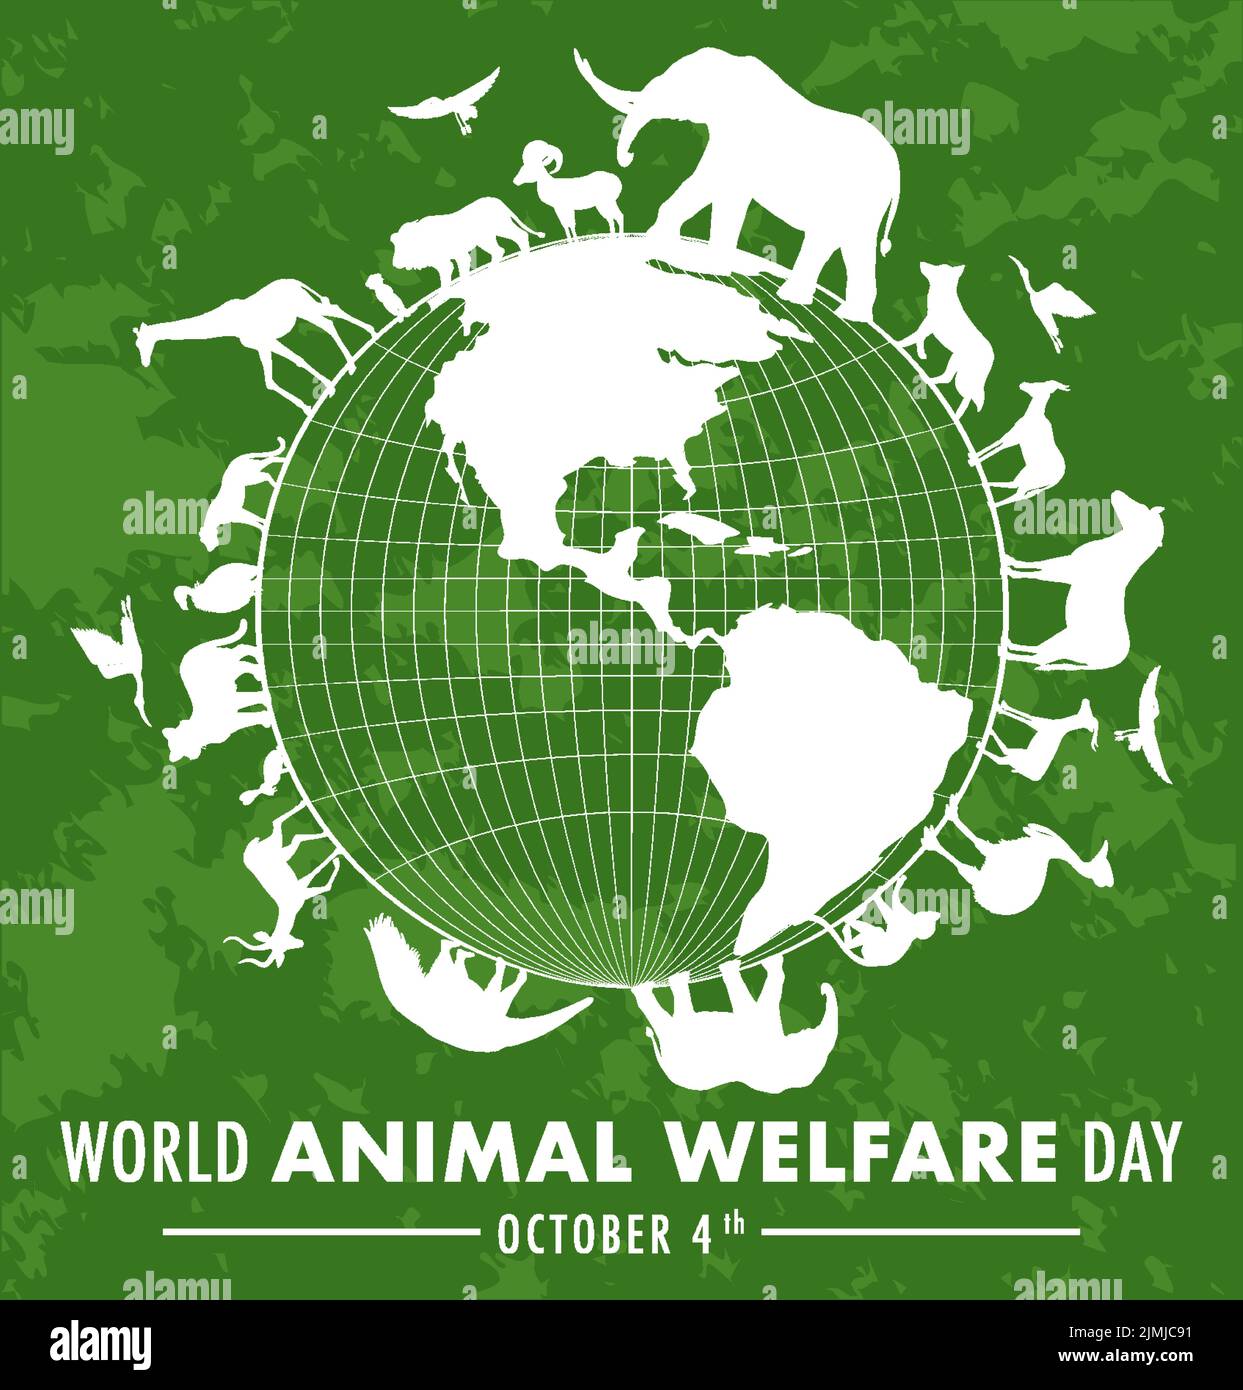 World Animal Welfare Day Concept Vector illustration Stock Vector Image  